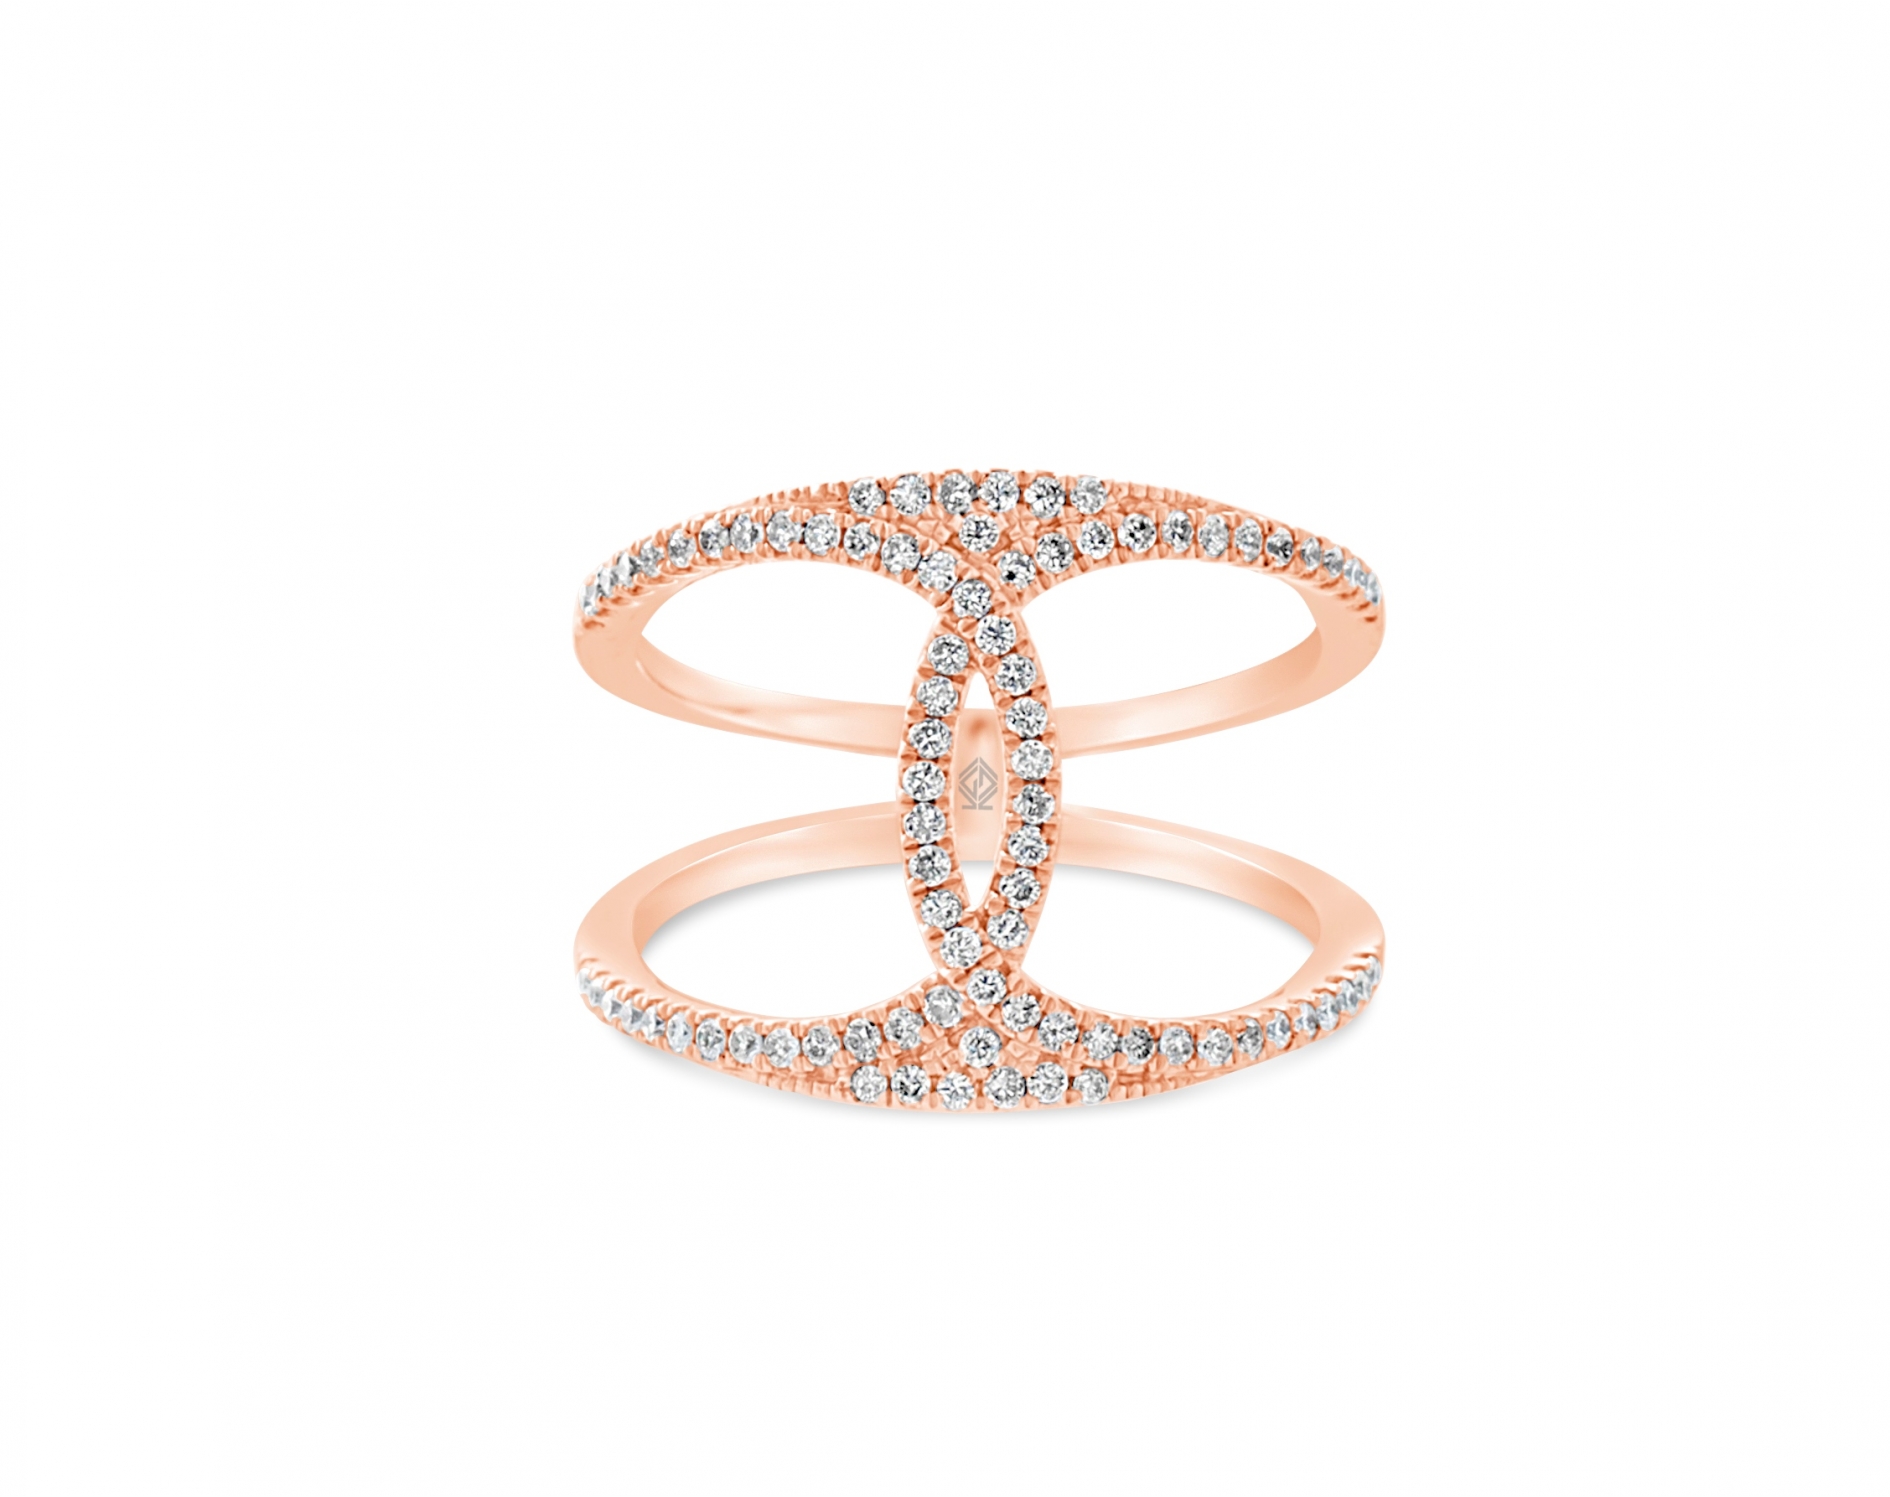 18k rose gold cc-fashion round shaped diamond ring Photos & images